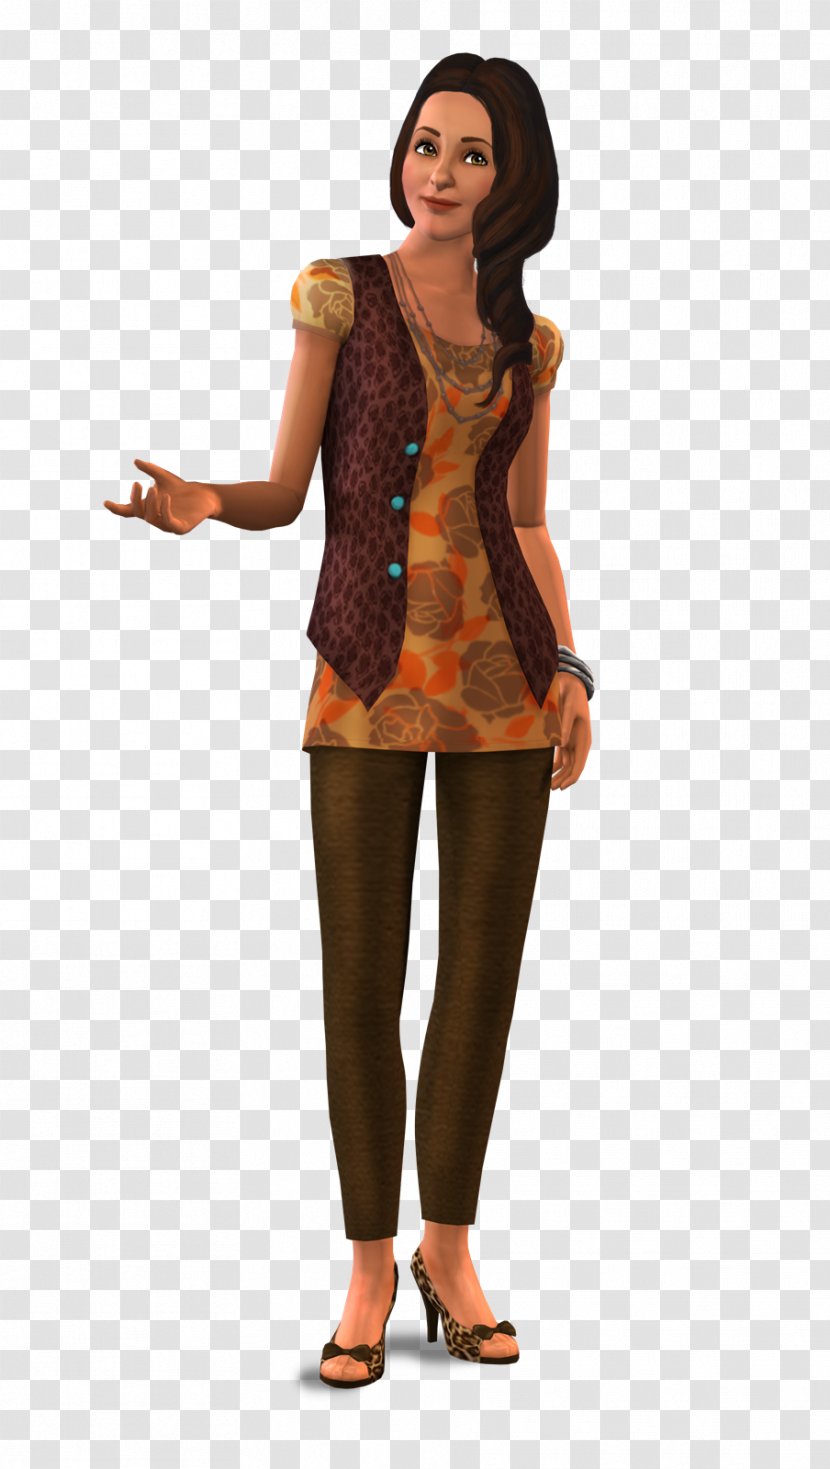 The Sims 3: University Life 4 PlayStation 3 - Leggings Transparent PNG